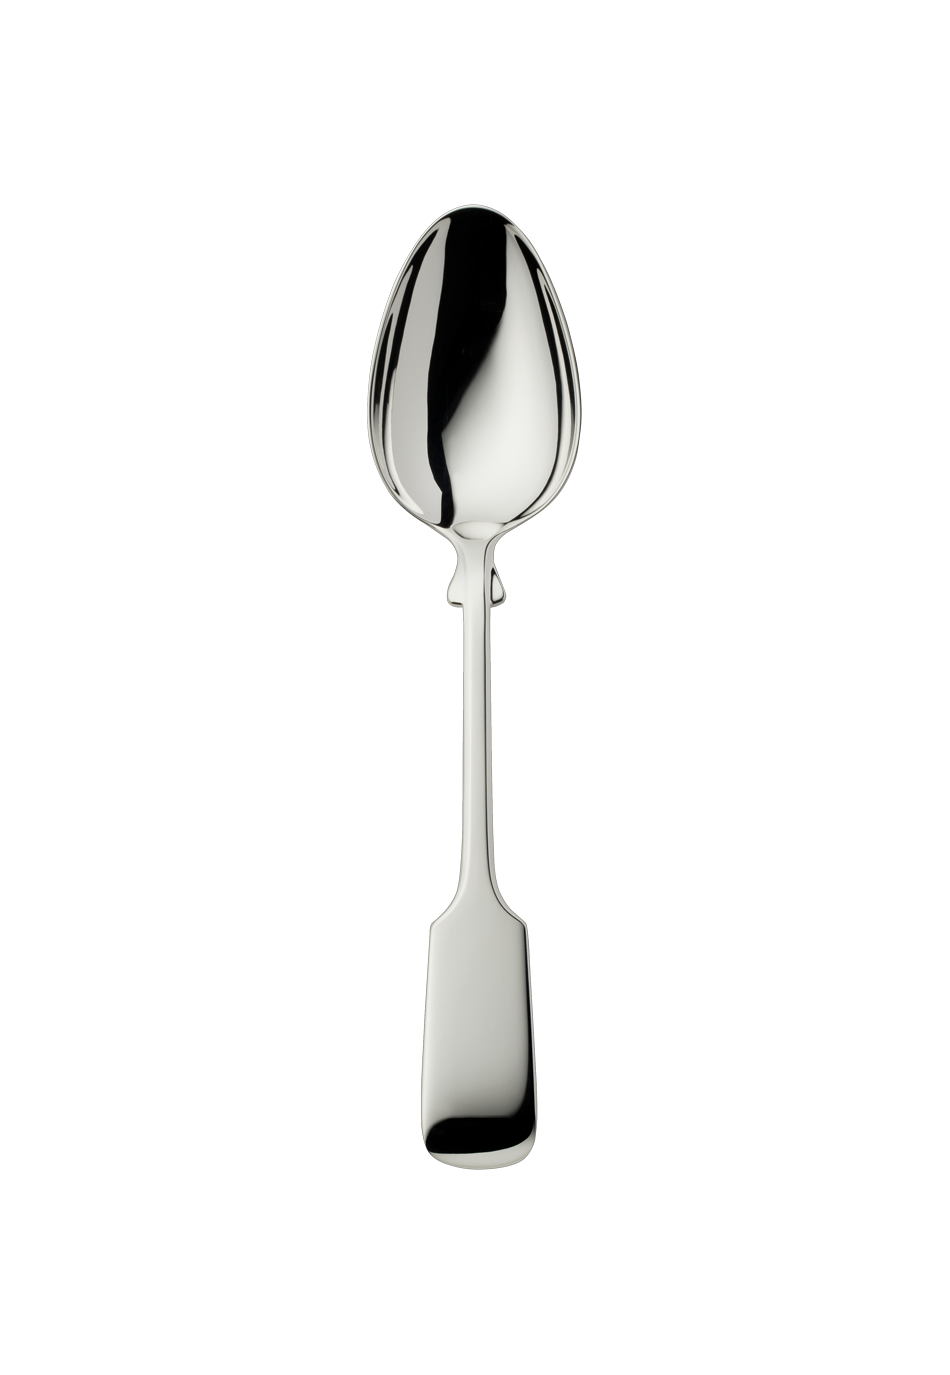 Alt-Spaten Menu Spoon (150g massive silverplated)